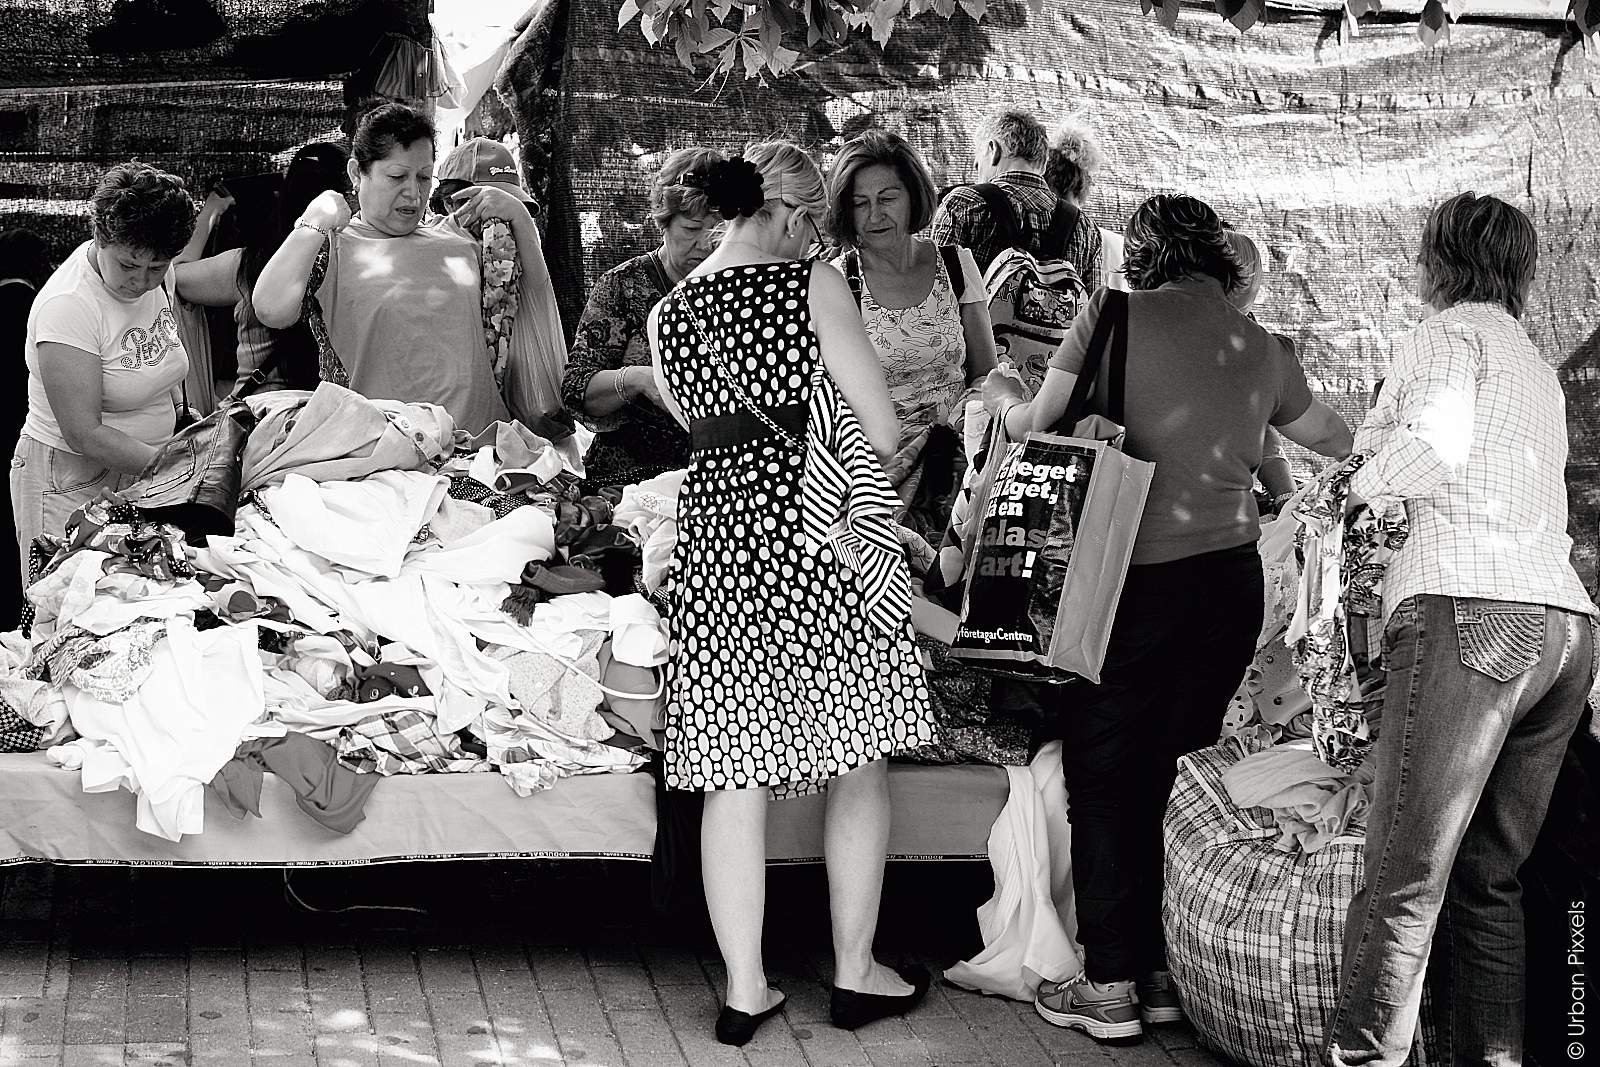 Spanish ladies shopping at the el Rastro market in Madrid